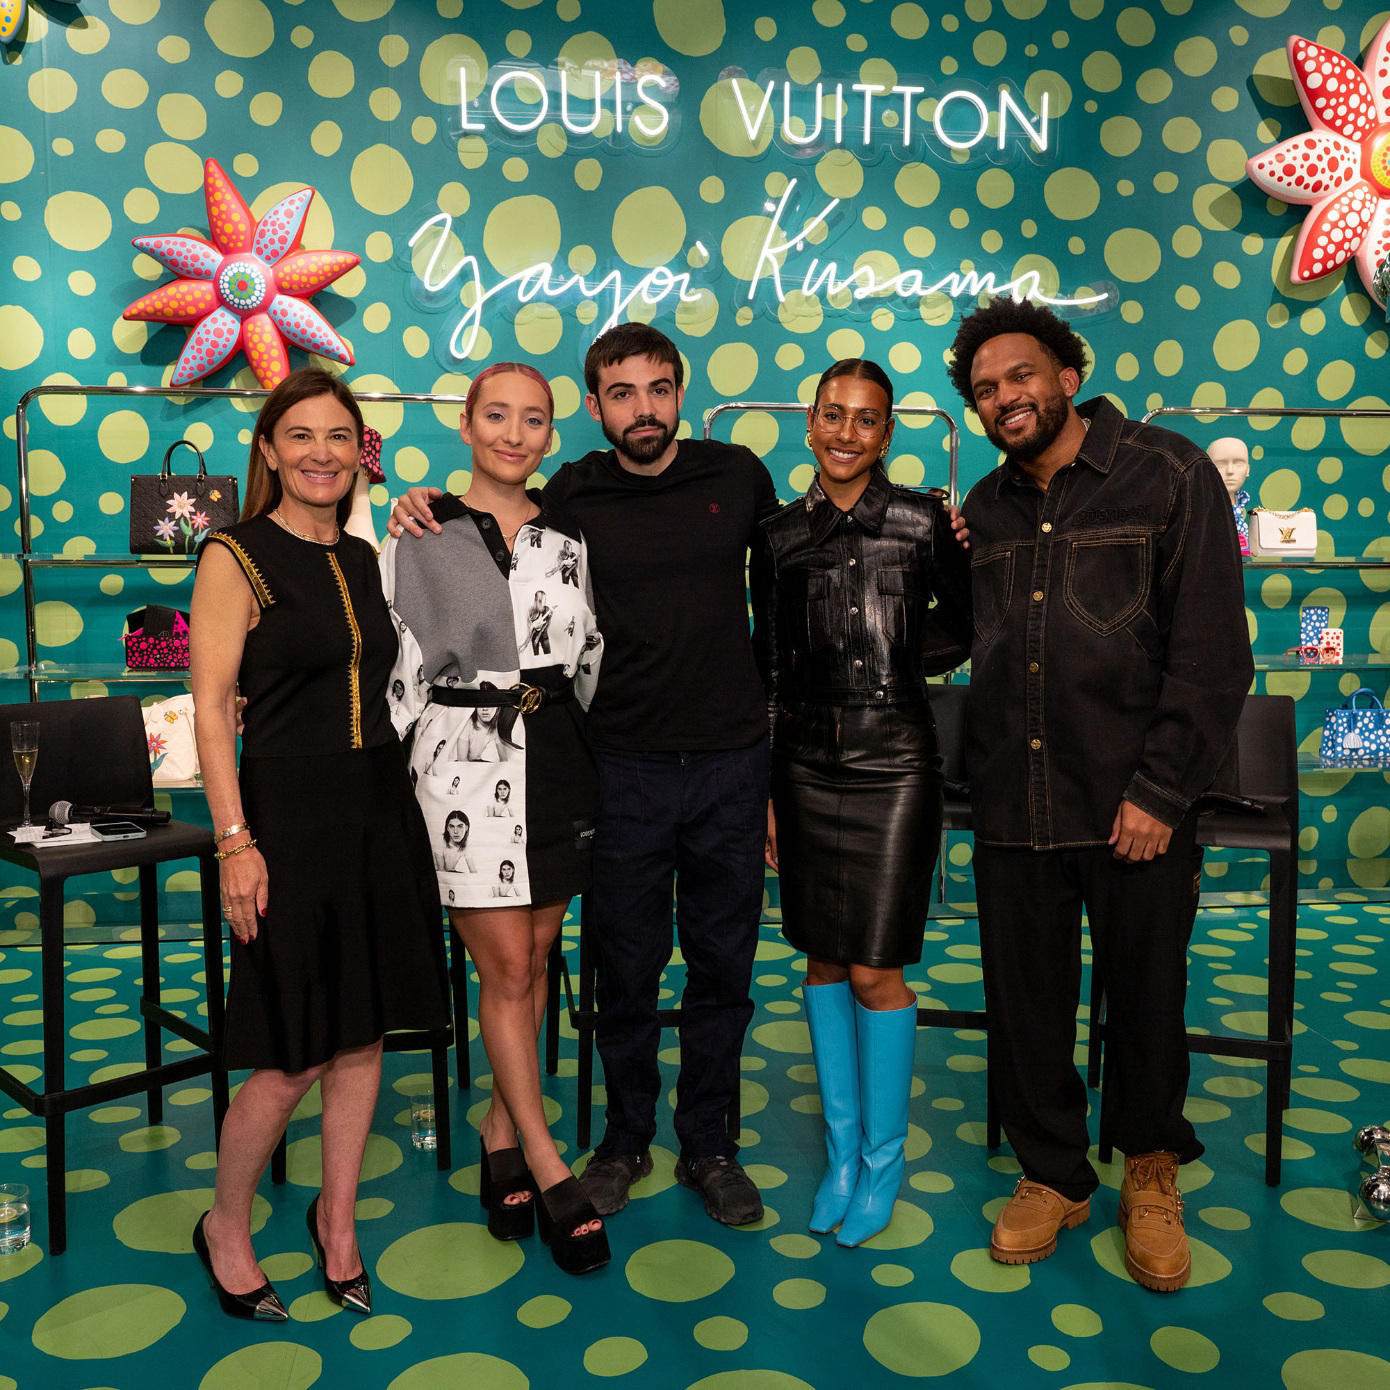 Yayoi Kusama x Louis Vuitton: When color pops!